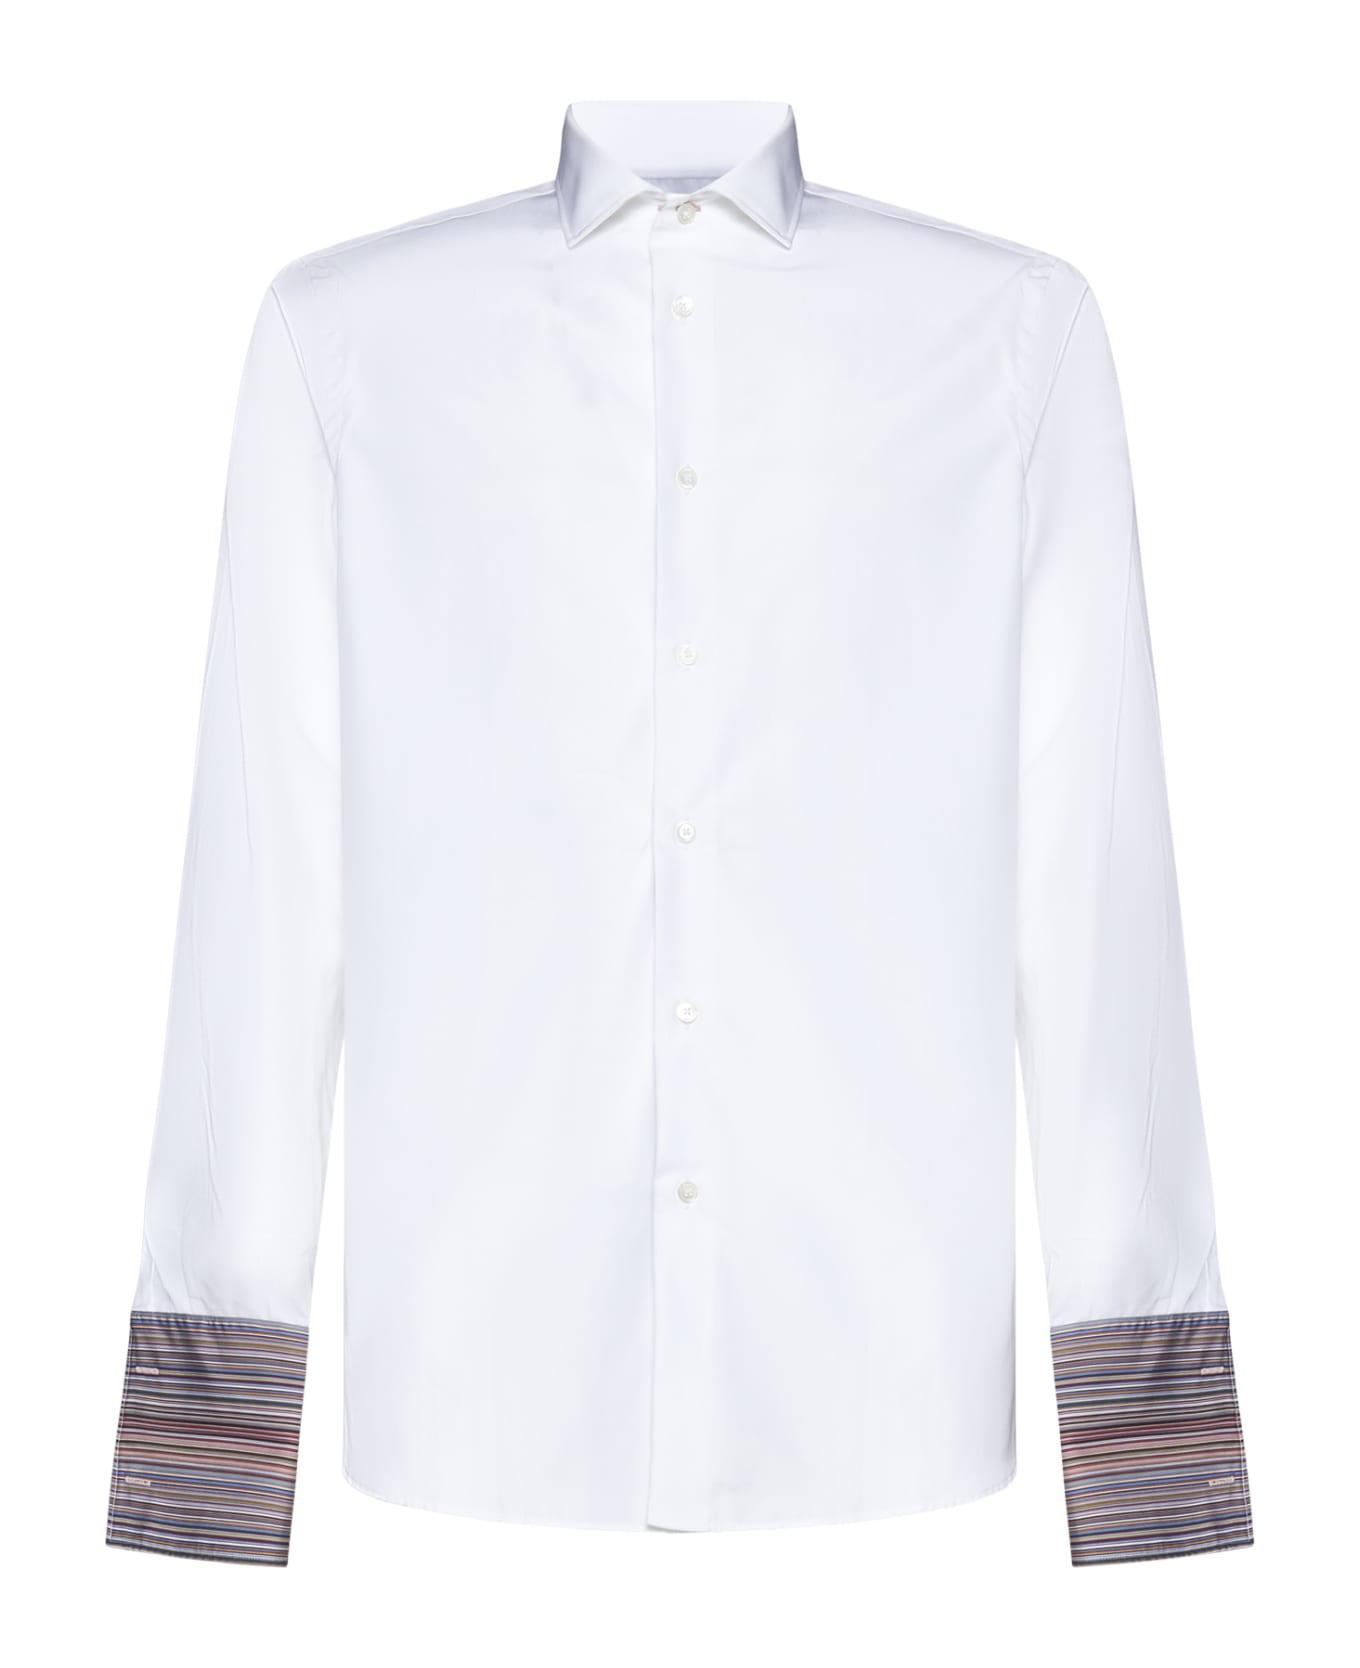 Paul Smith Shirt - White